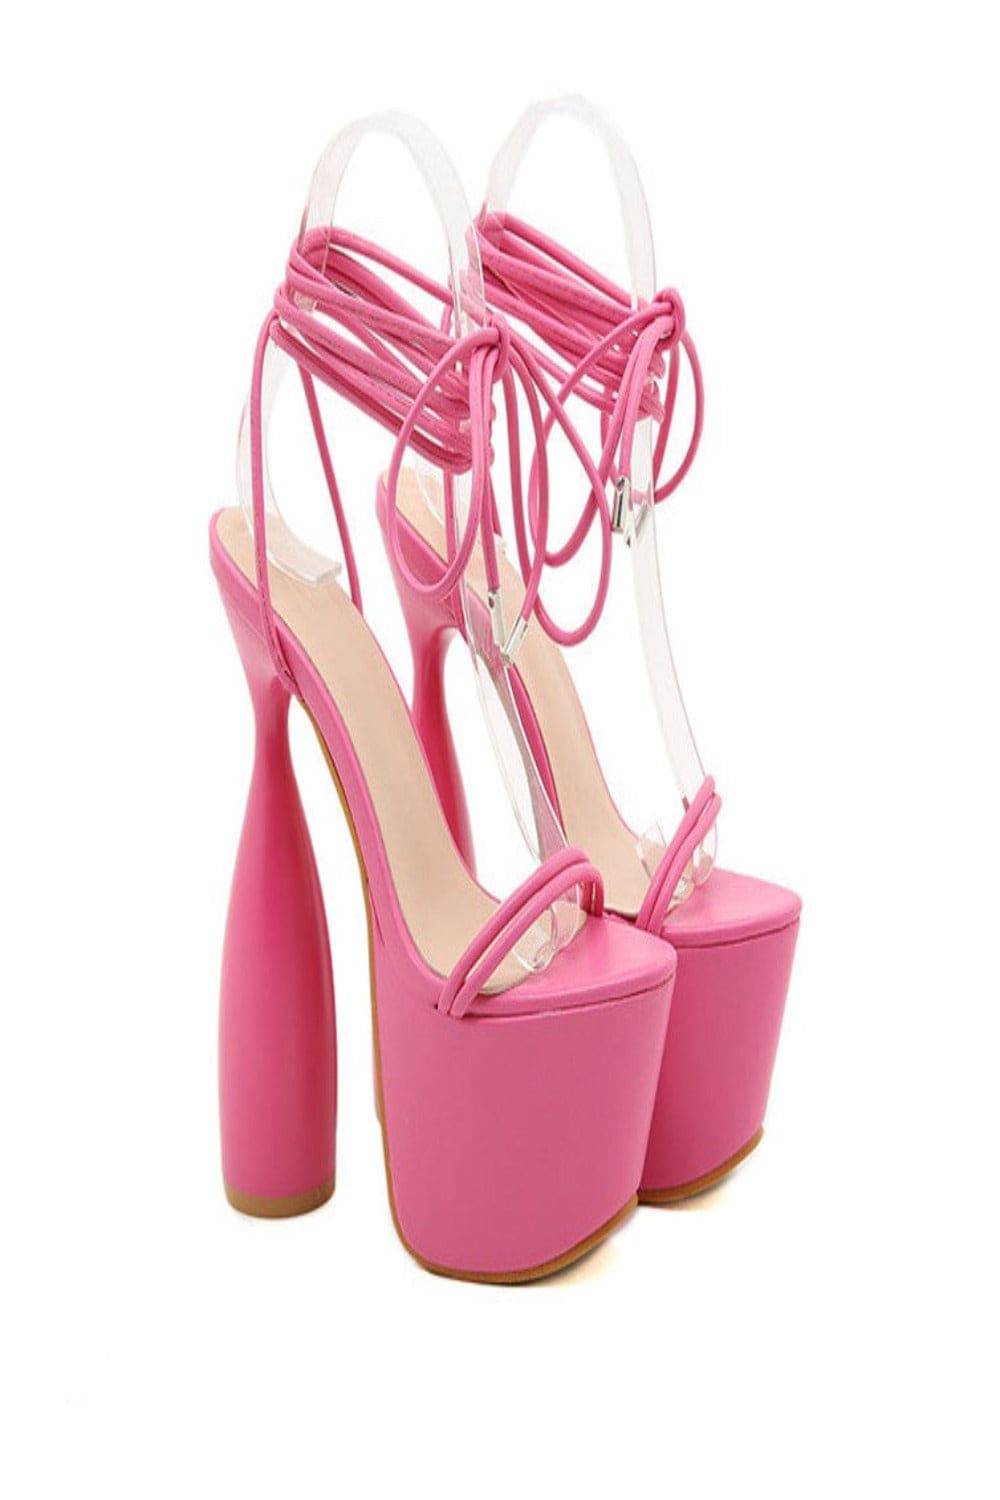 Chucky Platform High Heel Hot Pink Sandals - TGC Boutique - Shoes